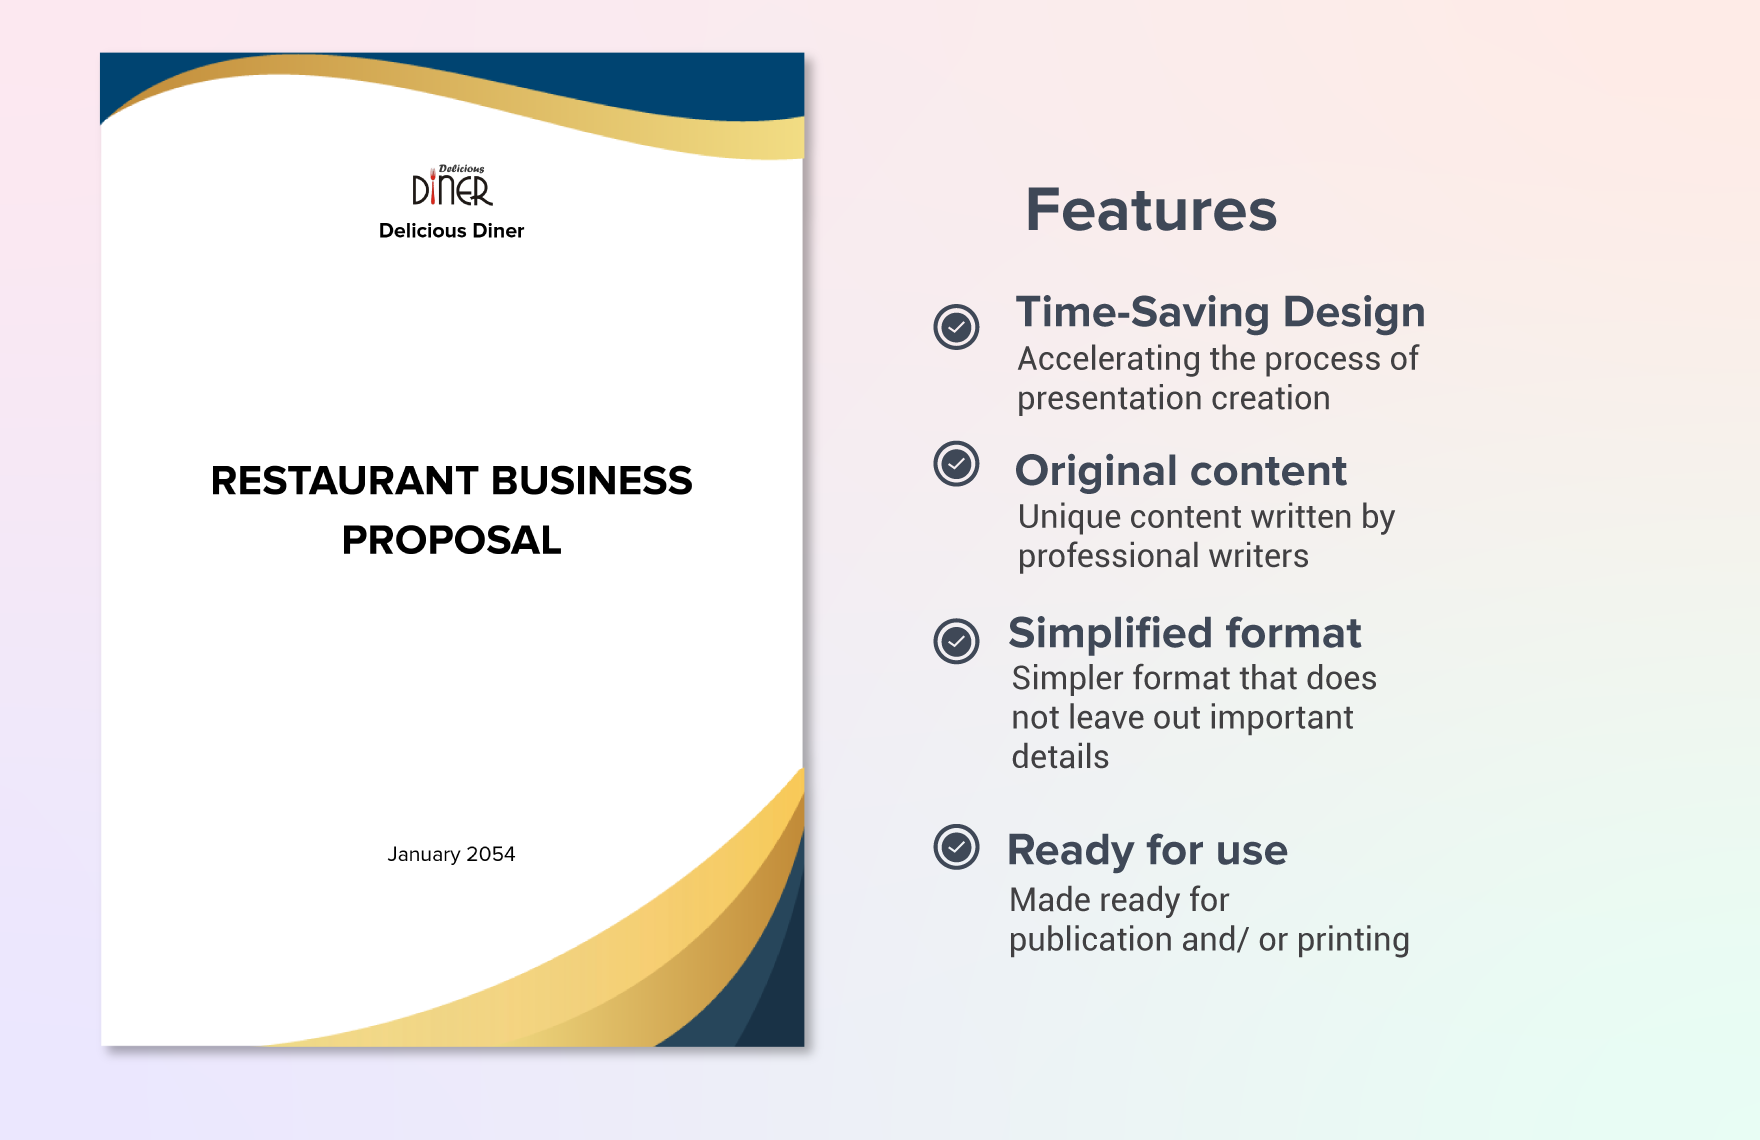 Innovative Restaurant Business Proposal Template